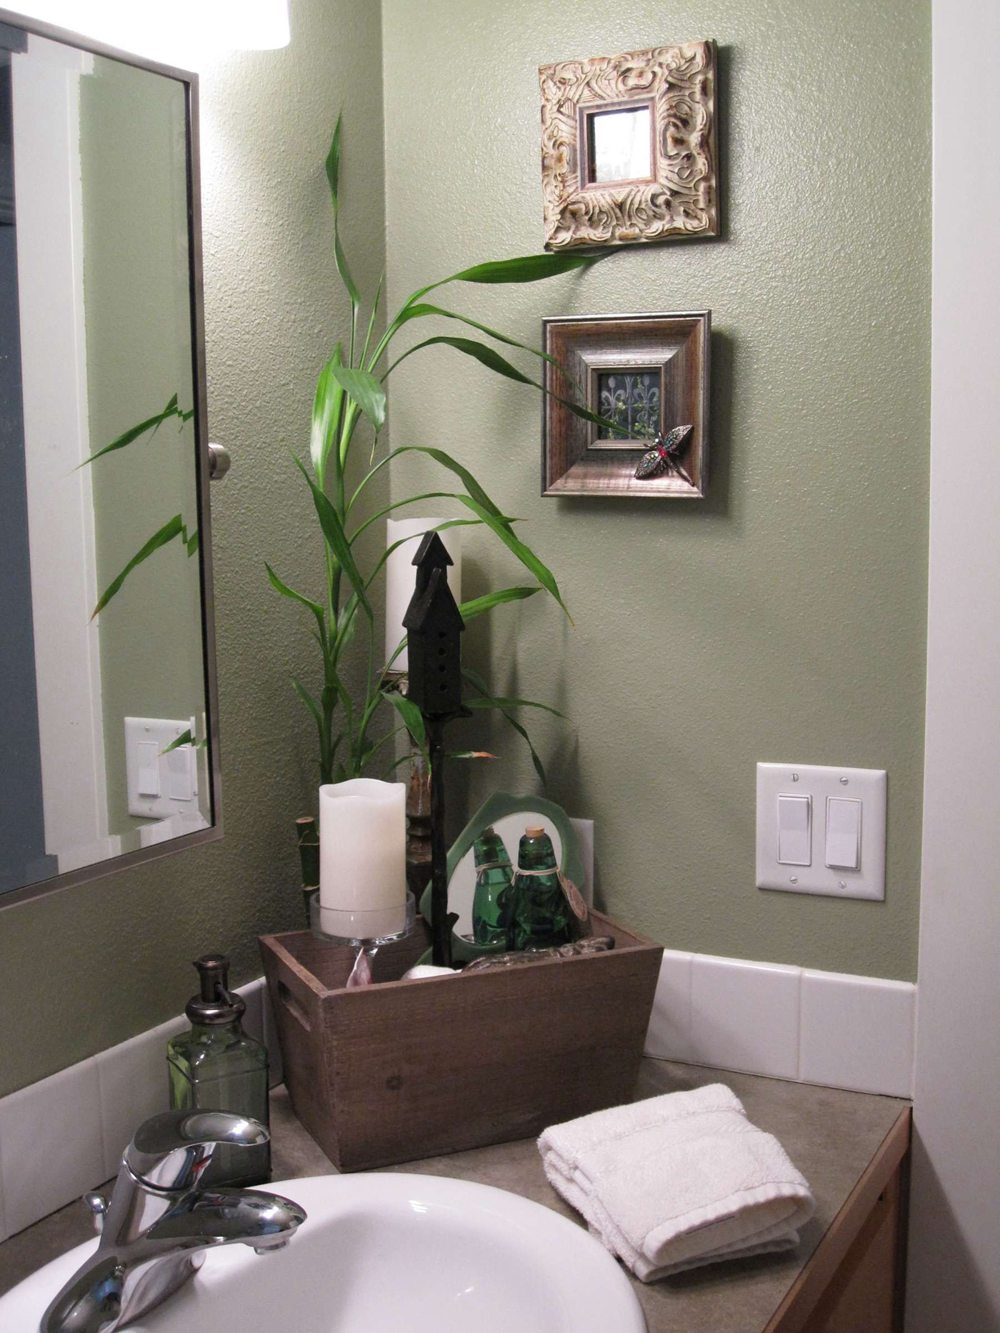 Olive Green bathroom